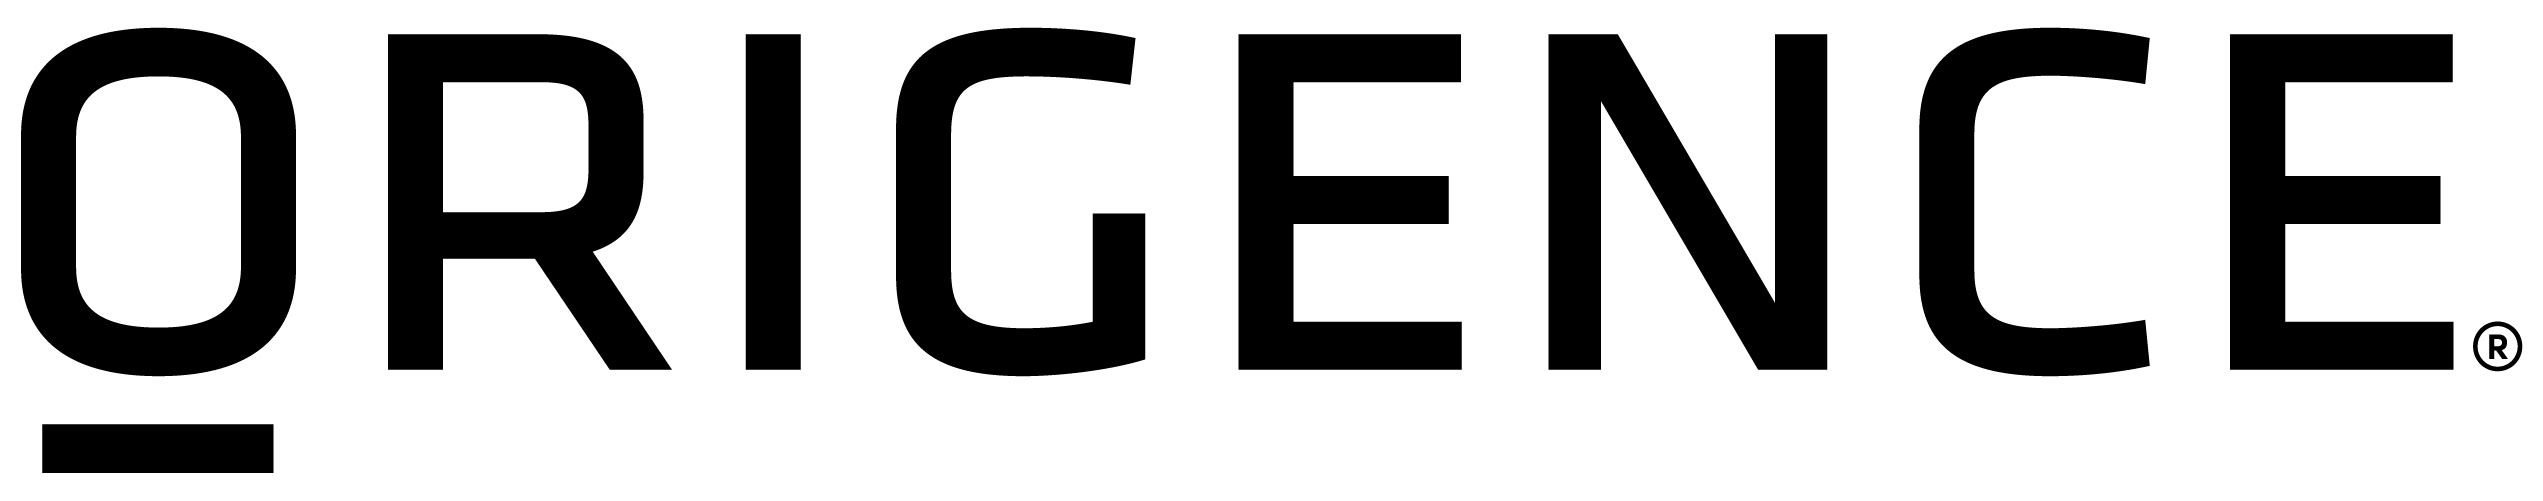 Origence logo